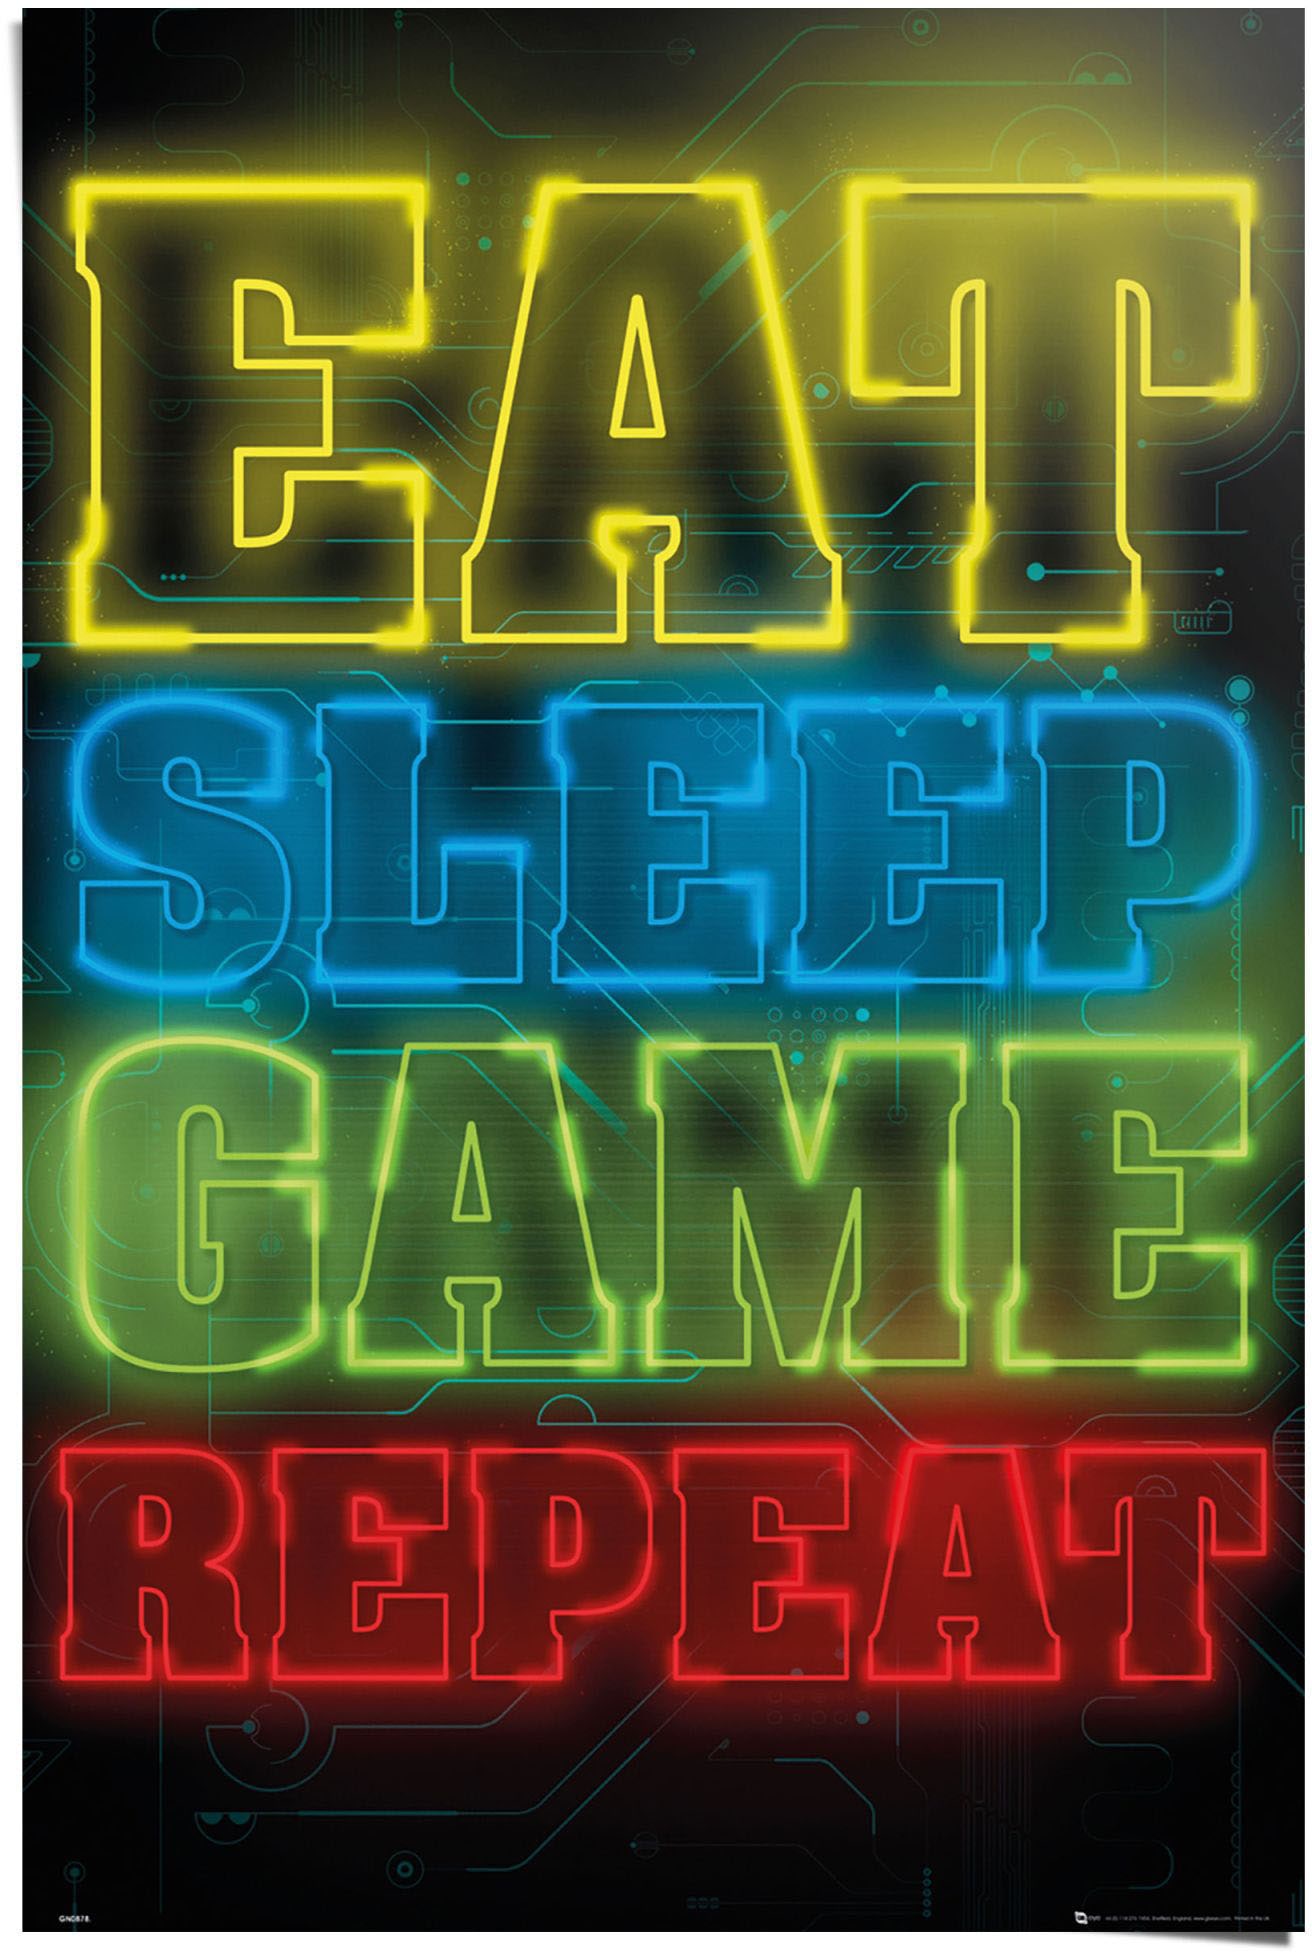 St.) Poster sleep kaufen Spiele, Reinders! »Poster Zocken (1 bequem Eat repeat«, game